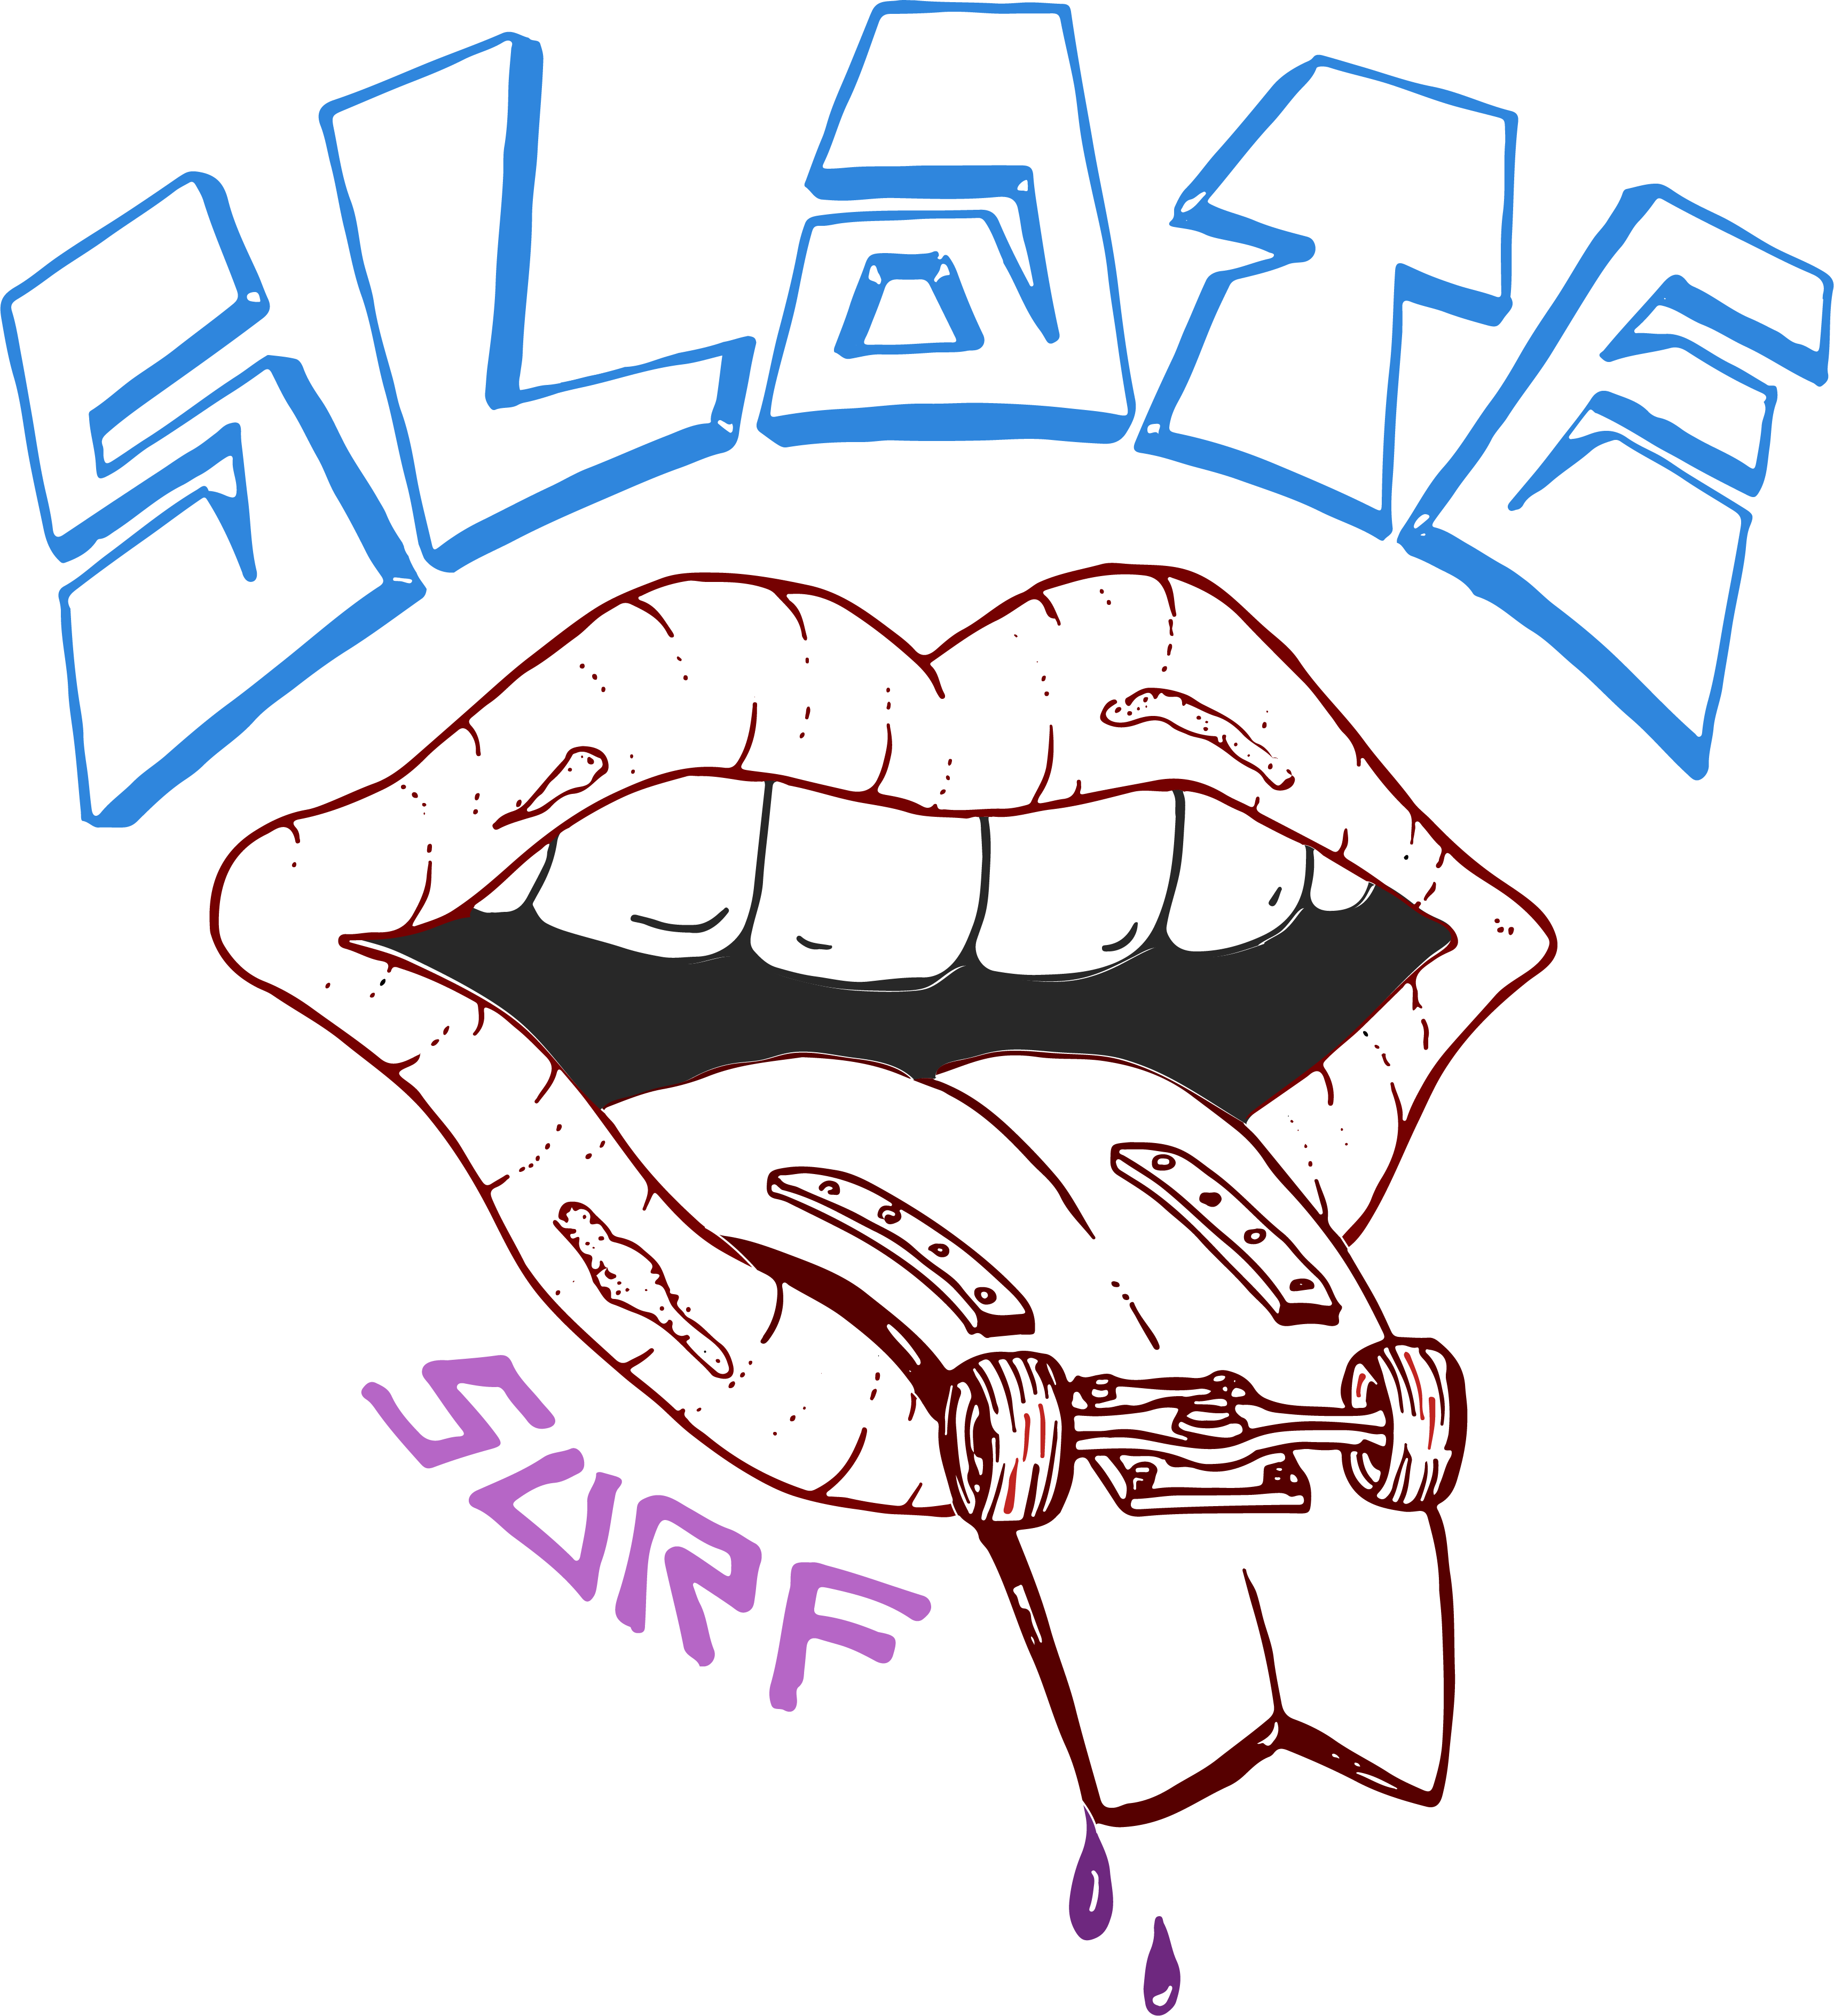 Slatesurf_tongue_blue_new